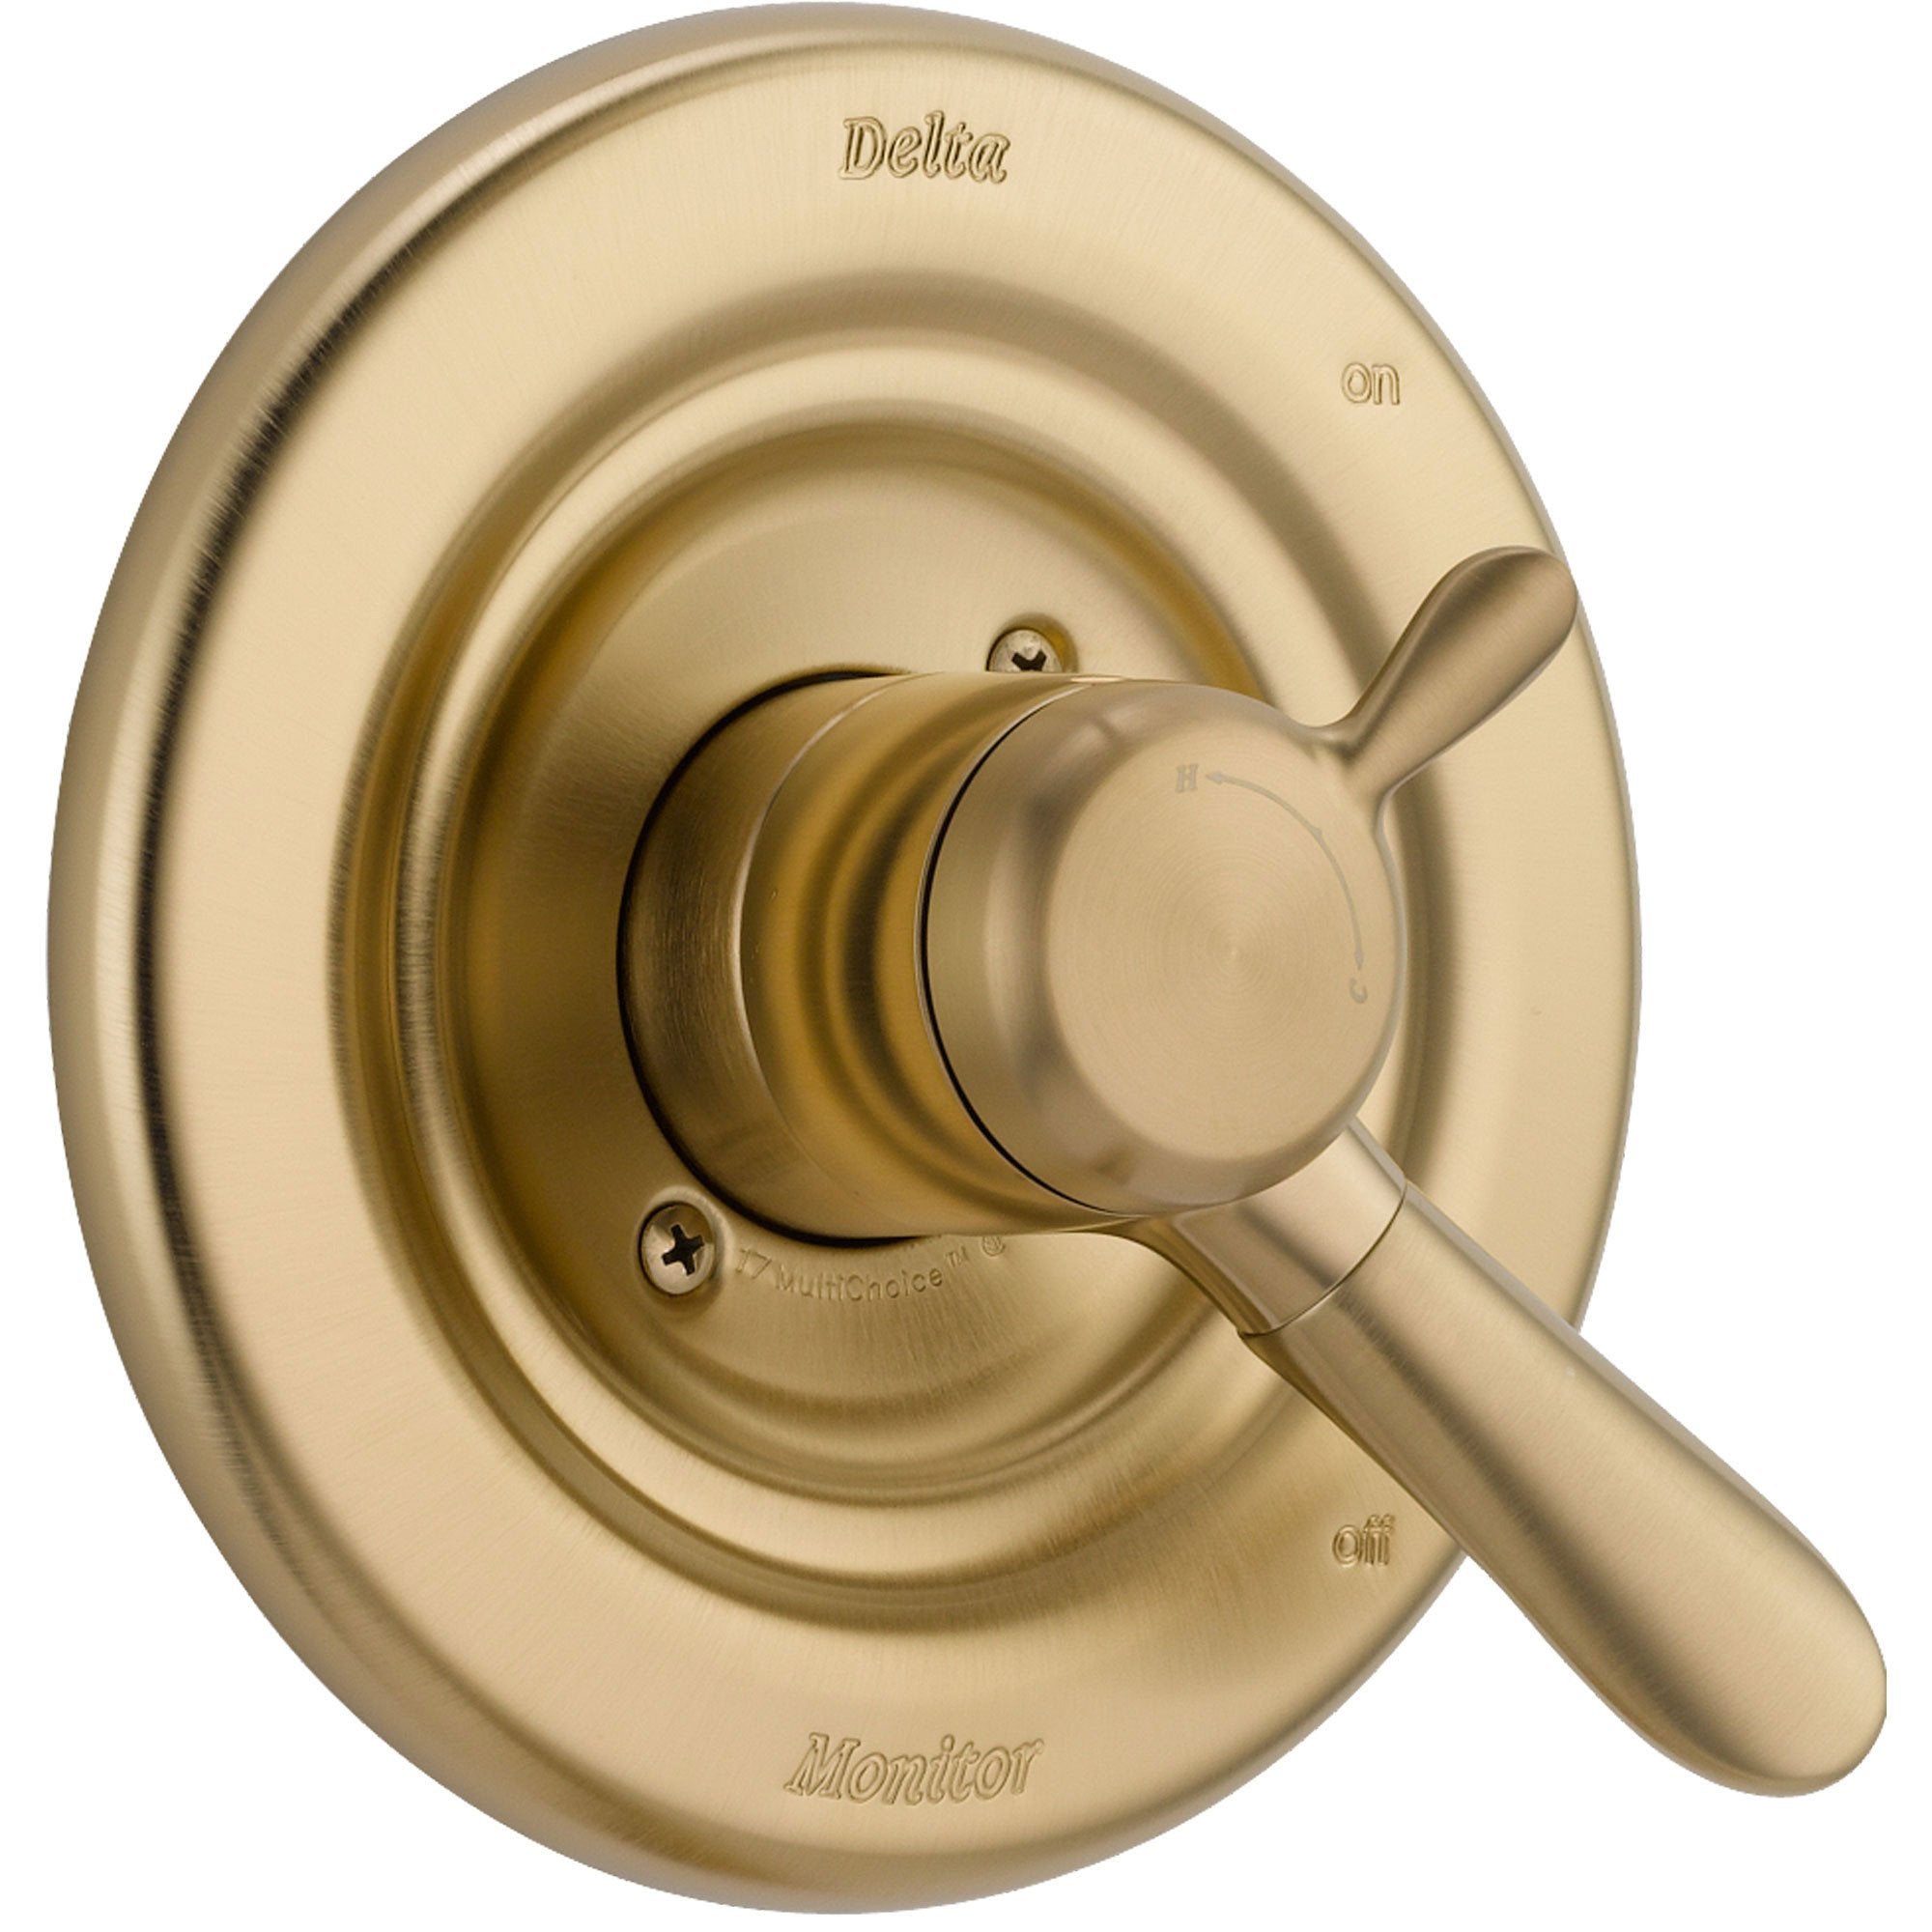 Delta Temperature and Volume Control Champagne Bronze Shower Faucet Trim 555892